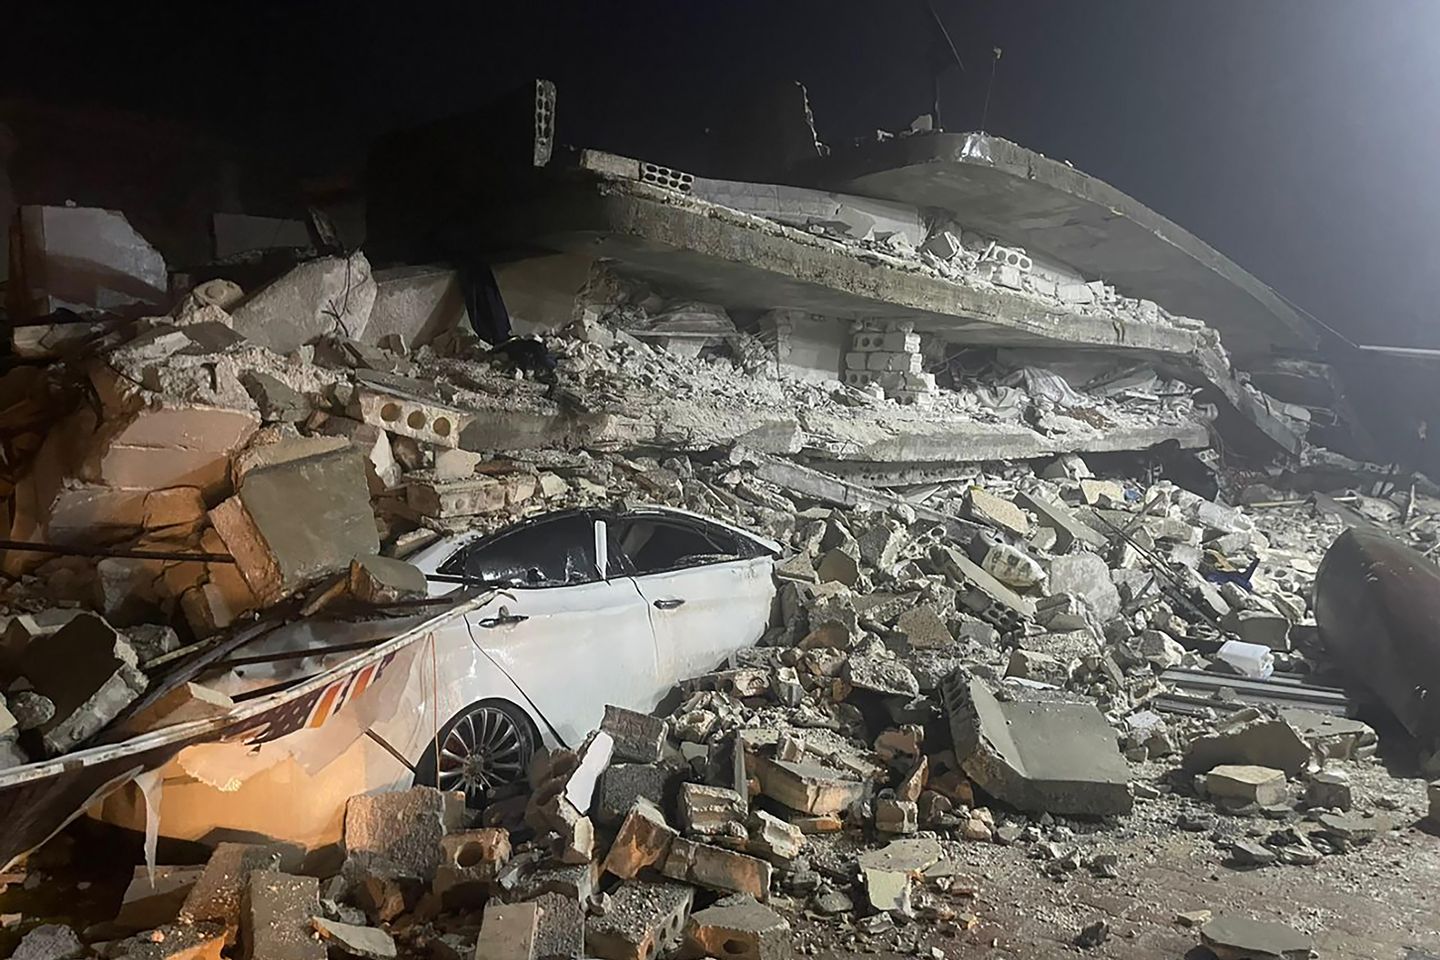 Pembaruan langsung |  Gempa dahsyat menewaskan banyak orang di Turki, Suriah